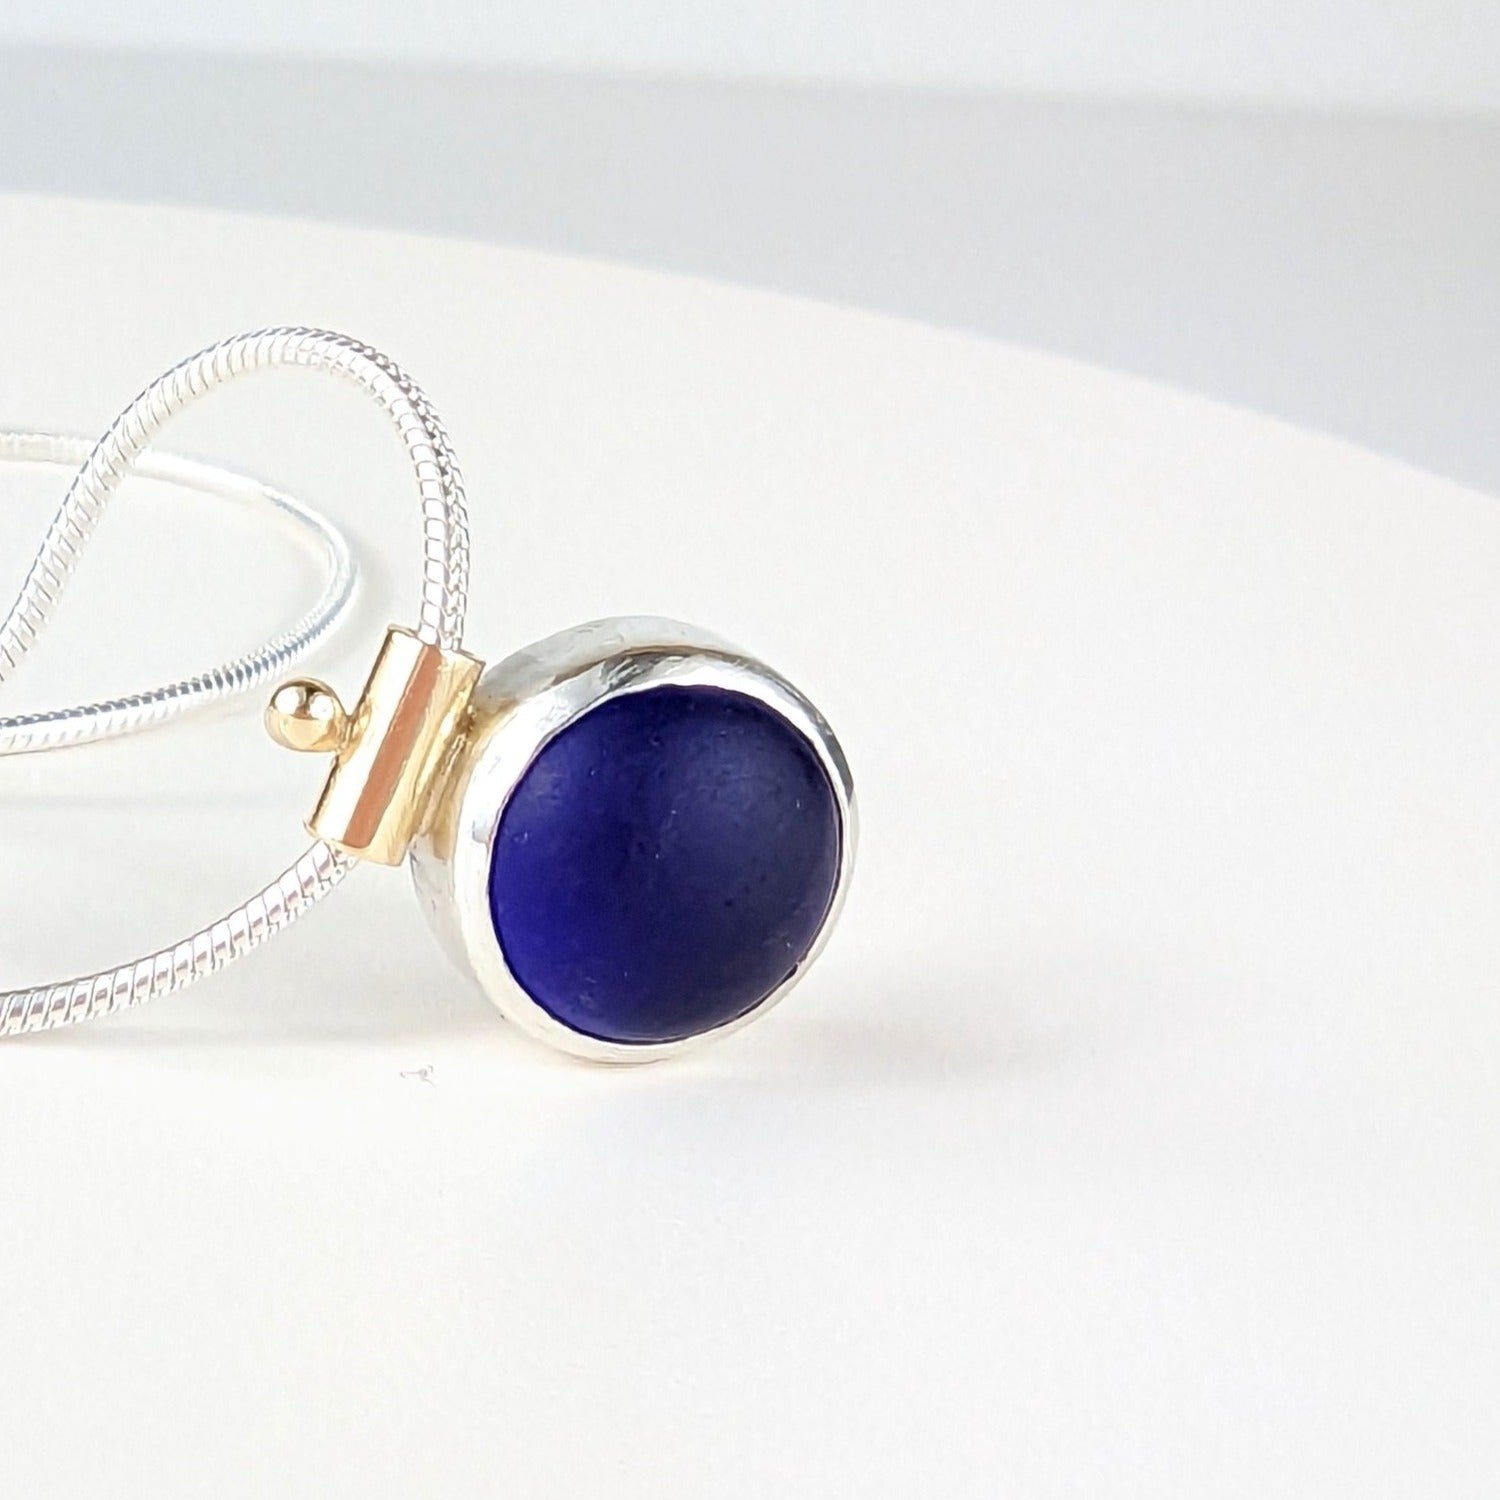 Deep cobalt blue sea glass necklace Limited ALLURE collection - Booblinka Jewellery